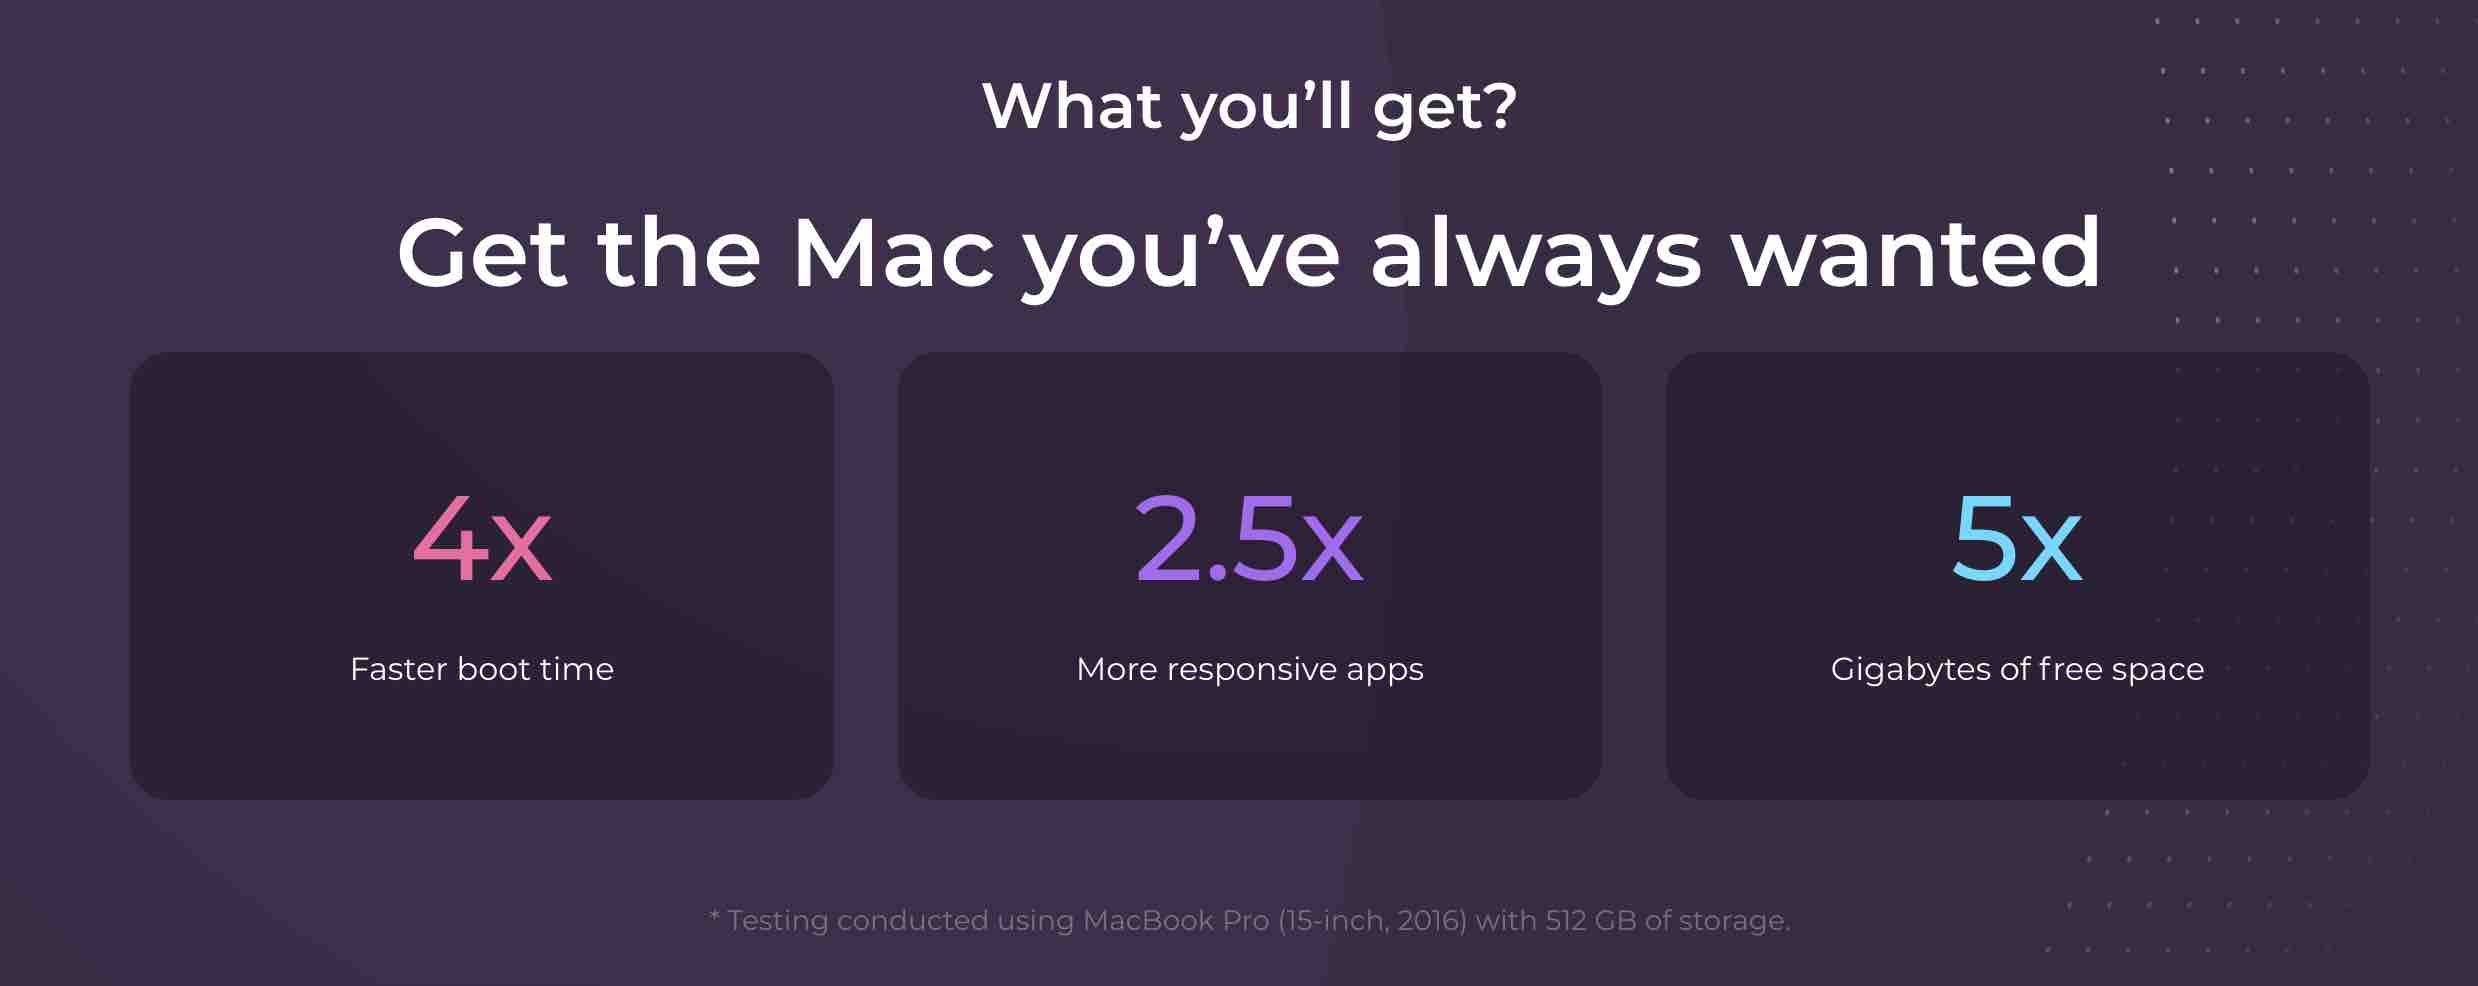 best mac cleaner 2020